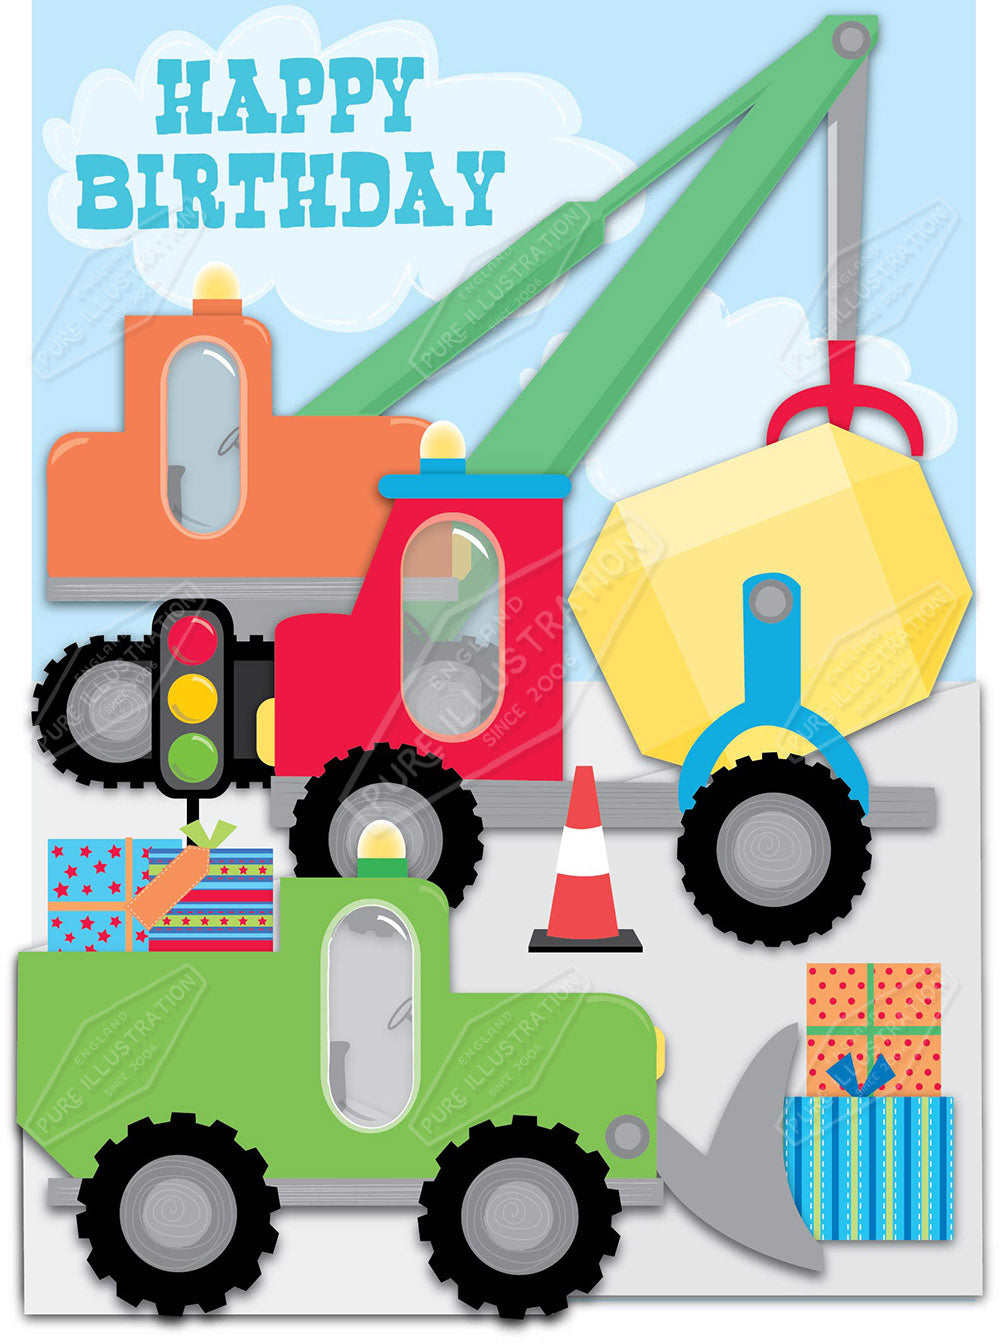 00032133AMC - Amanda McDonough is represented by Pure Art Licensing Agency - Birthday Greeting Card Design